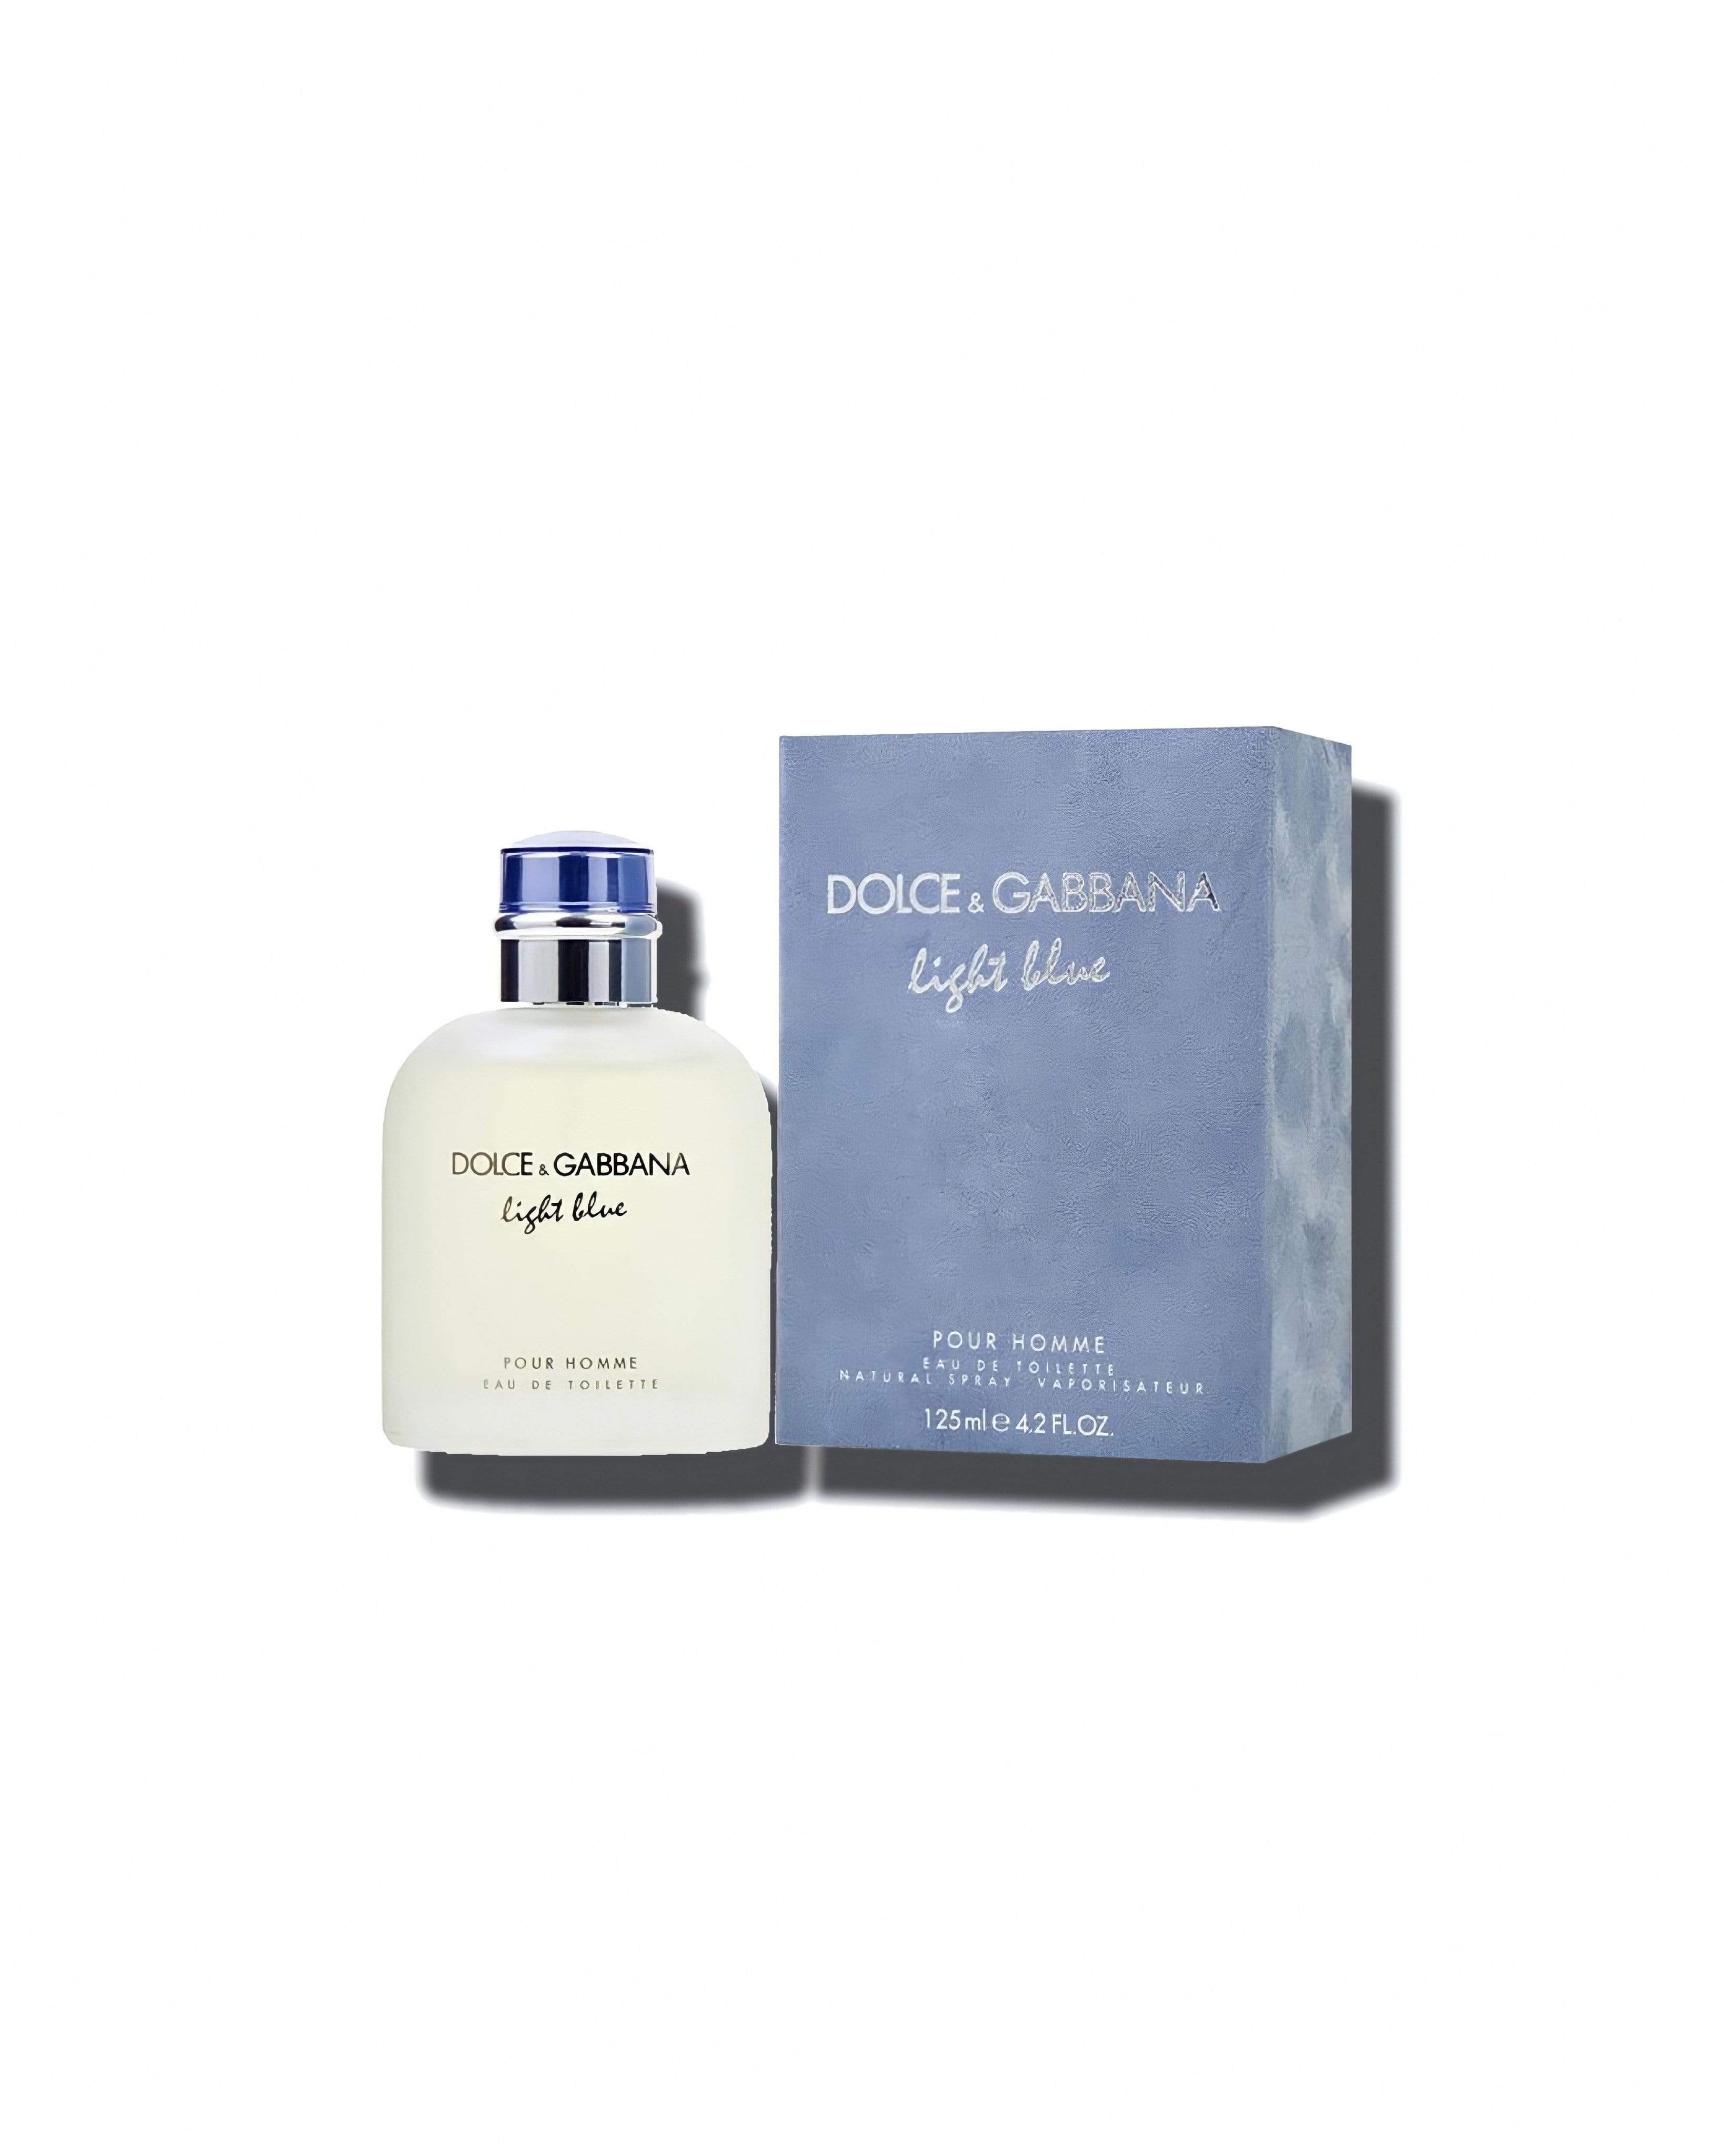 Dolce & Gabbana Eau De Toilette Spray, Light Blue - 4.2 fl oz bottle